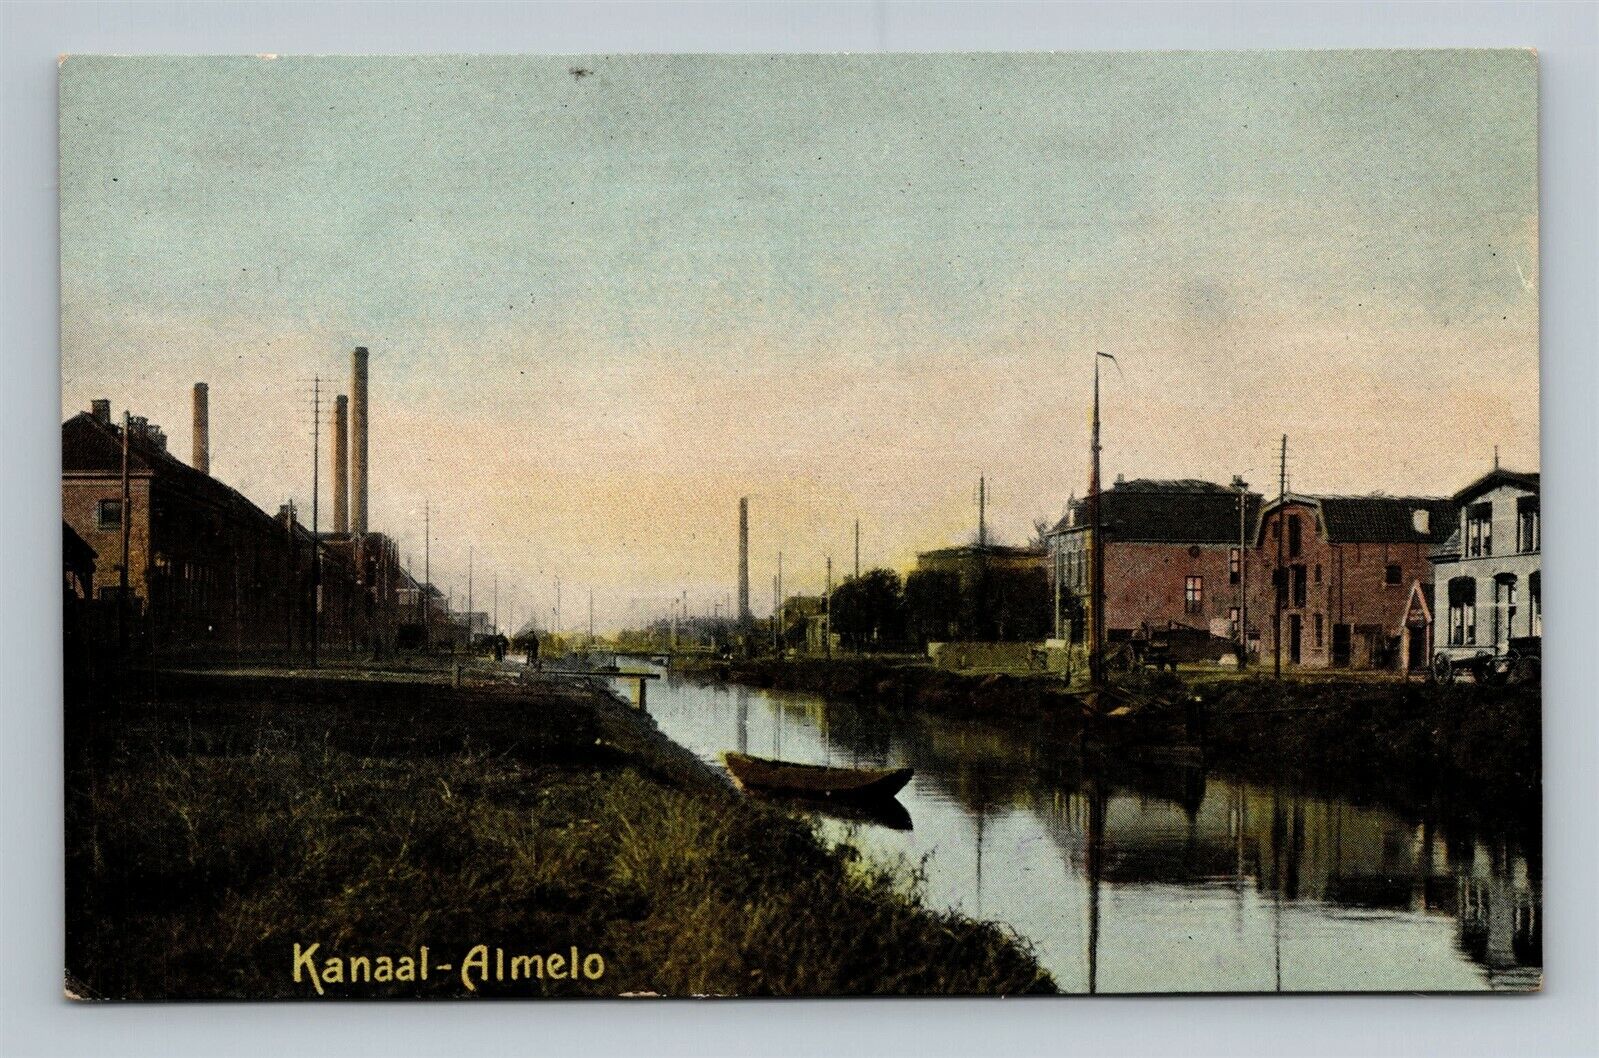 Almelo Kanaal Canal Scene c1900s 1910s Old Overijssel Netherlands Postcard FLAW